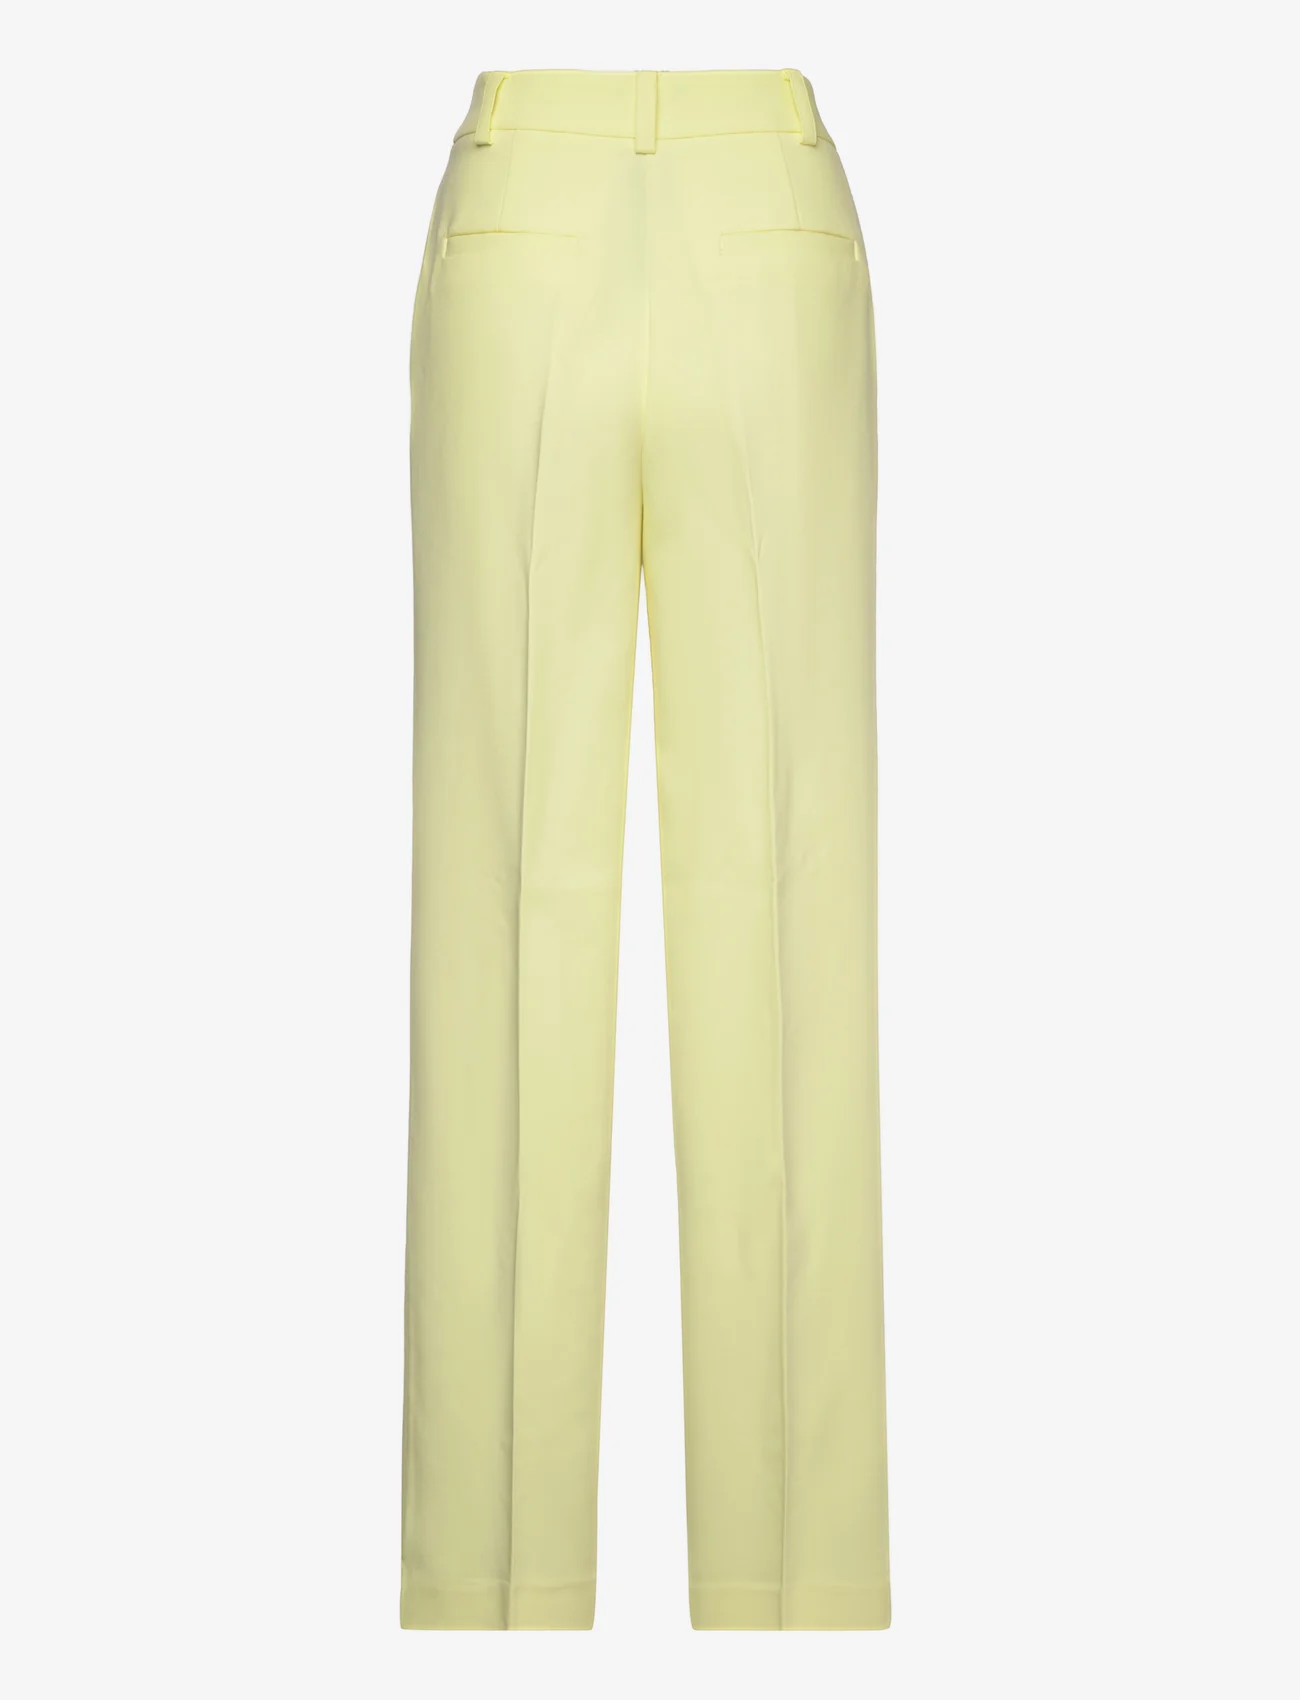 Modström - Gale pants - feestelijke kleding voor outlet-prijzen - yellow pear - 1